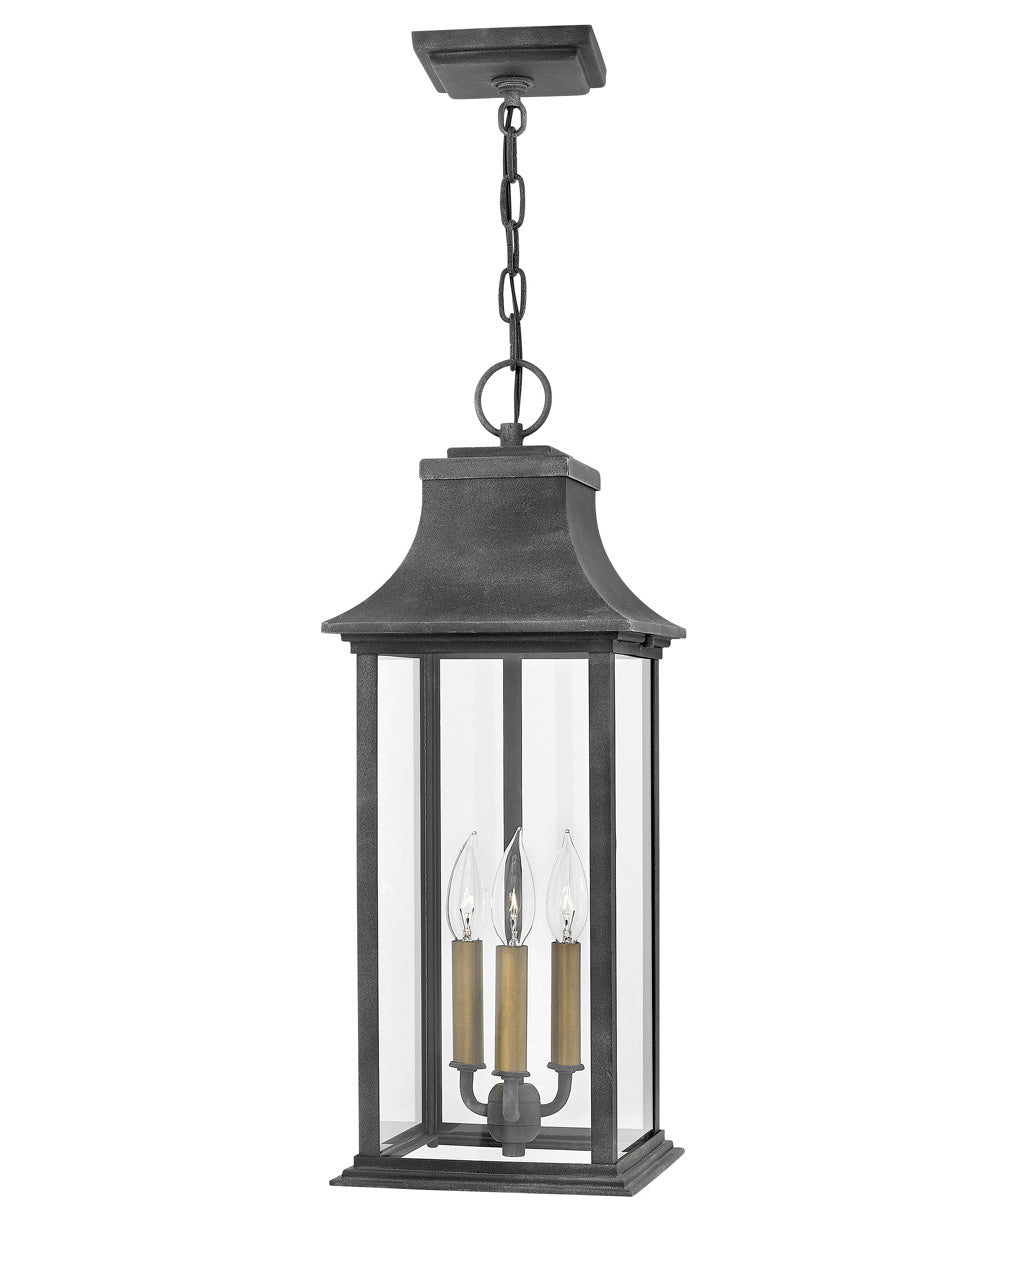 Hinkley ADAIR-Large Hanging Lantern 2932 Outdoor Light Fixture l Hanging Hinkley Aged Zinc  